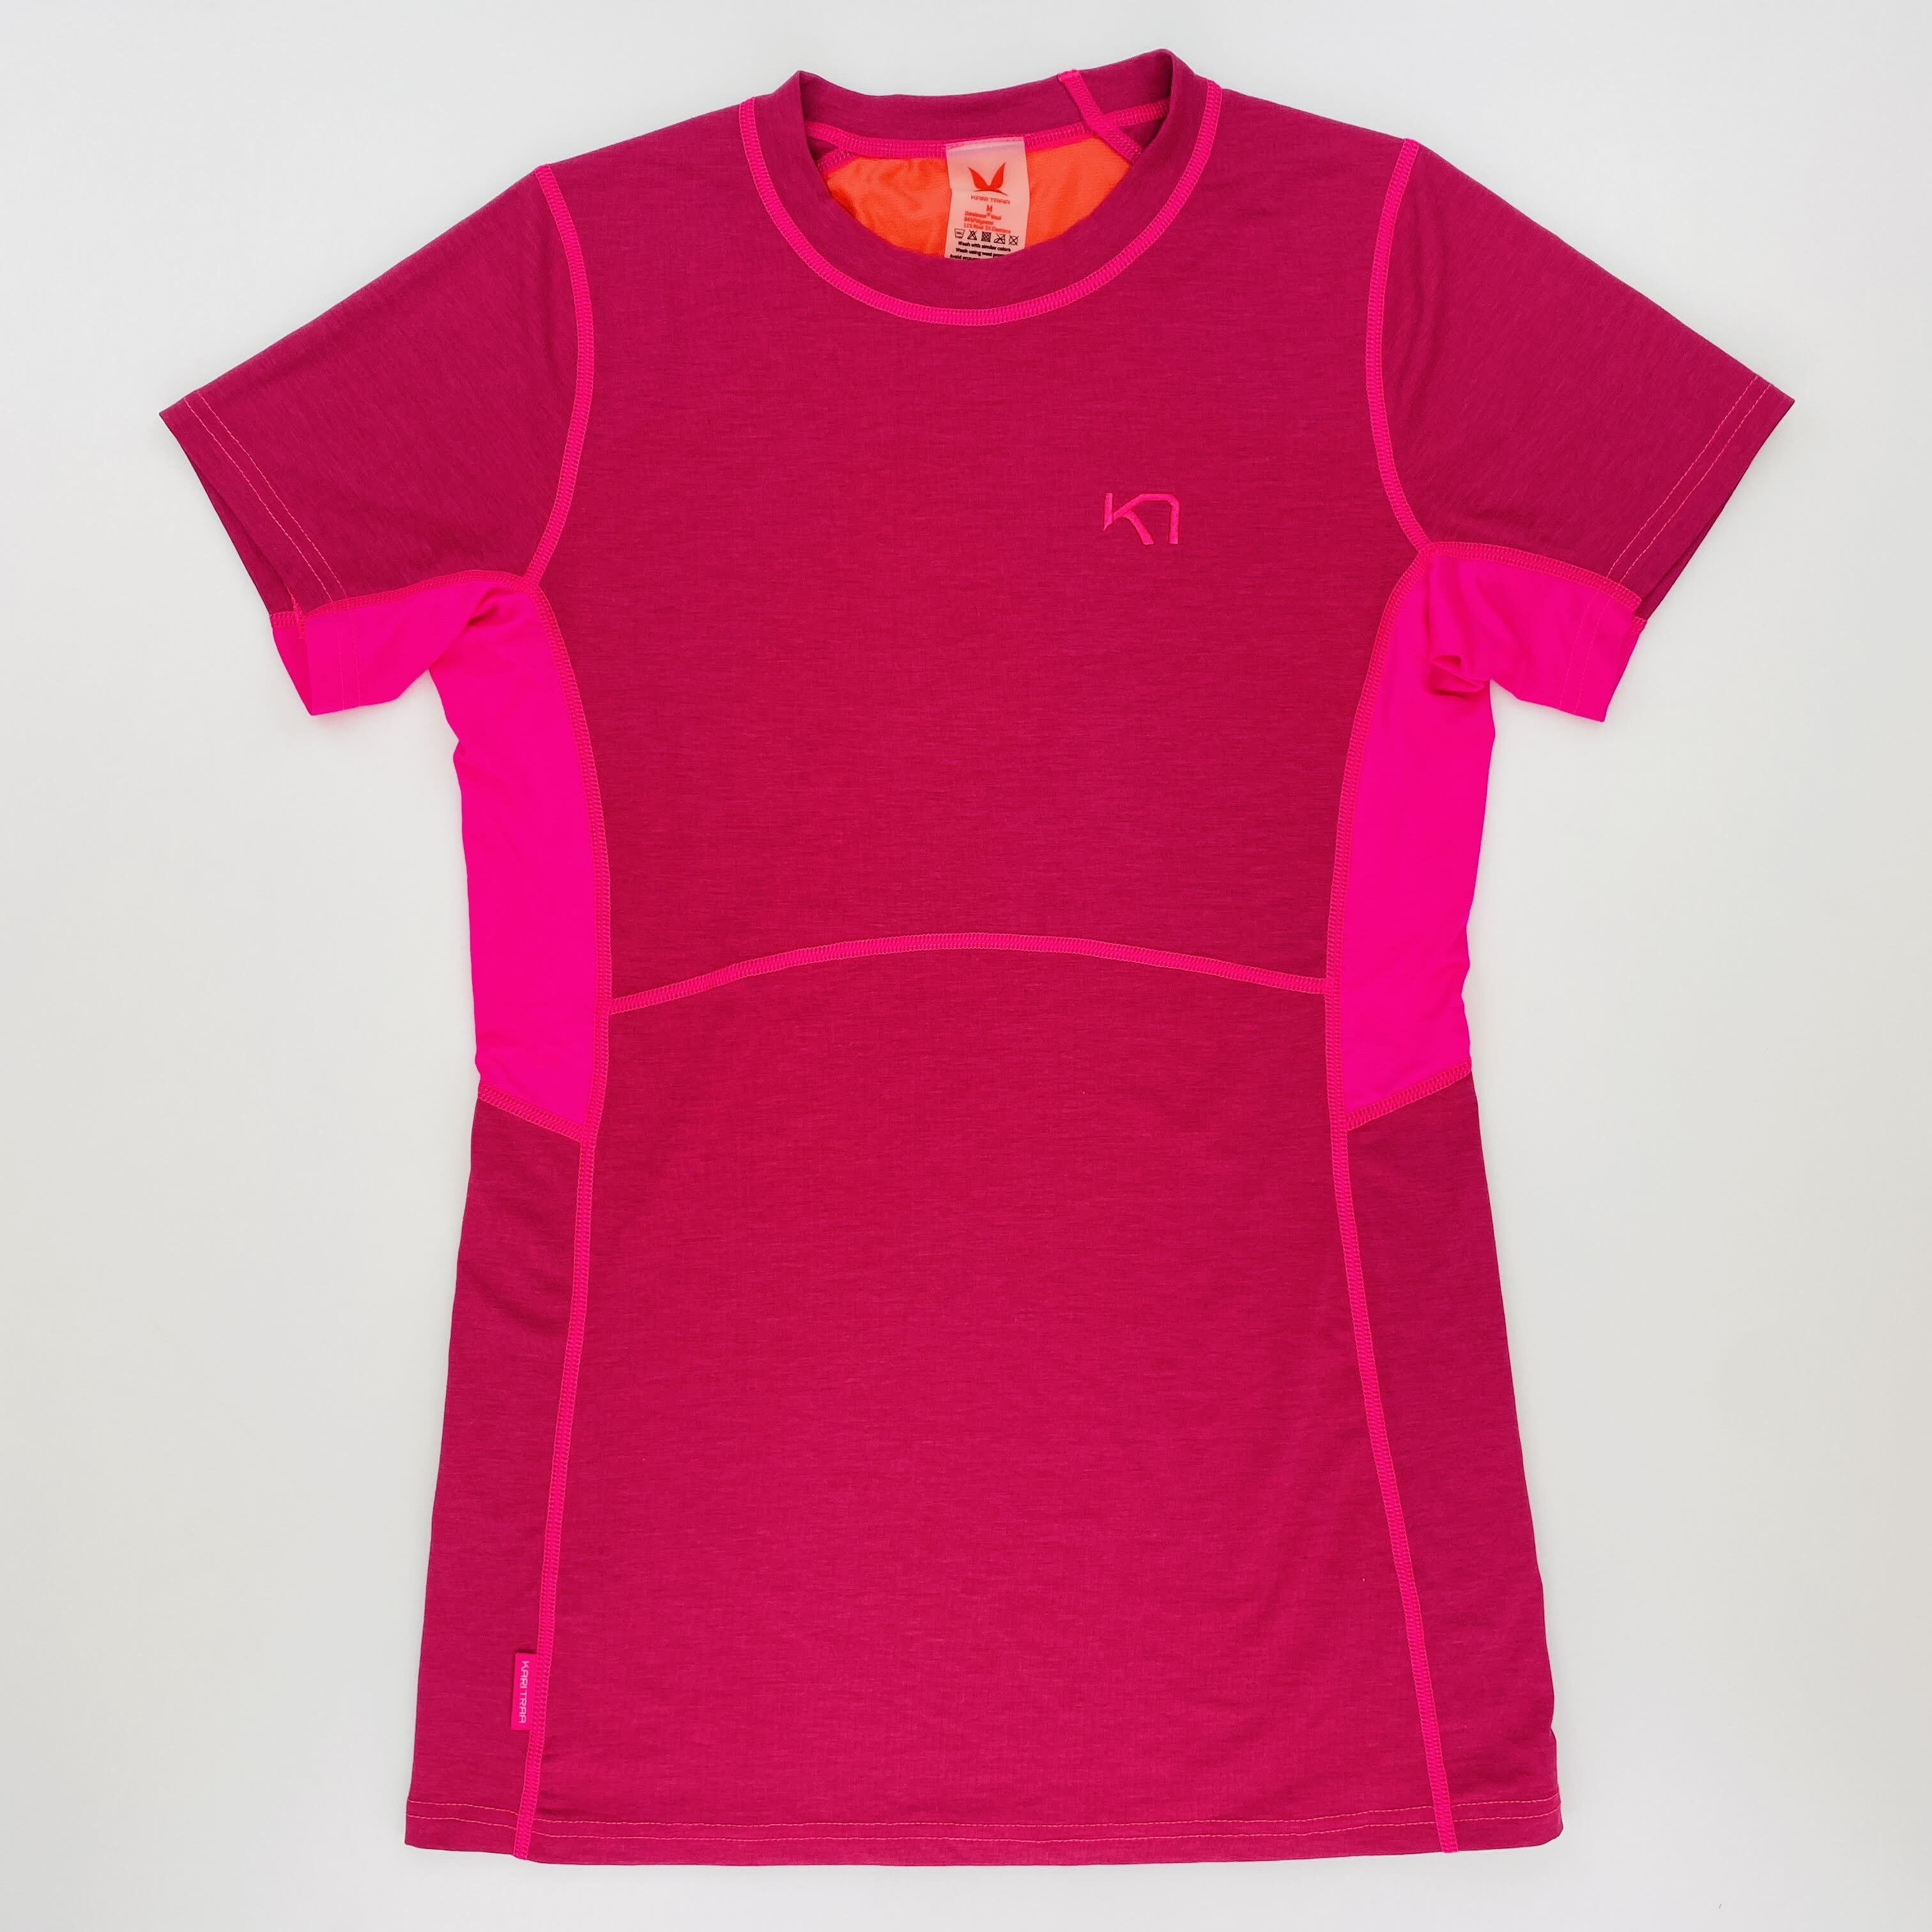 Kari Traa Svala Tee - Seconde main T-shirt femme - Rose - M | Hardloop